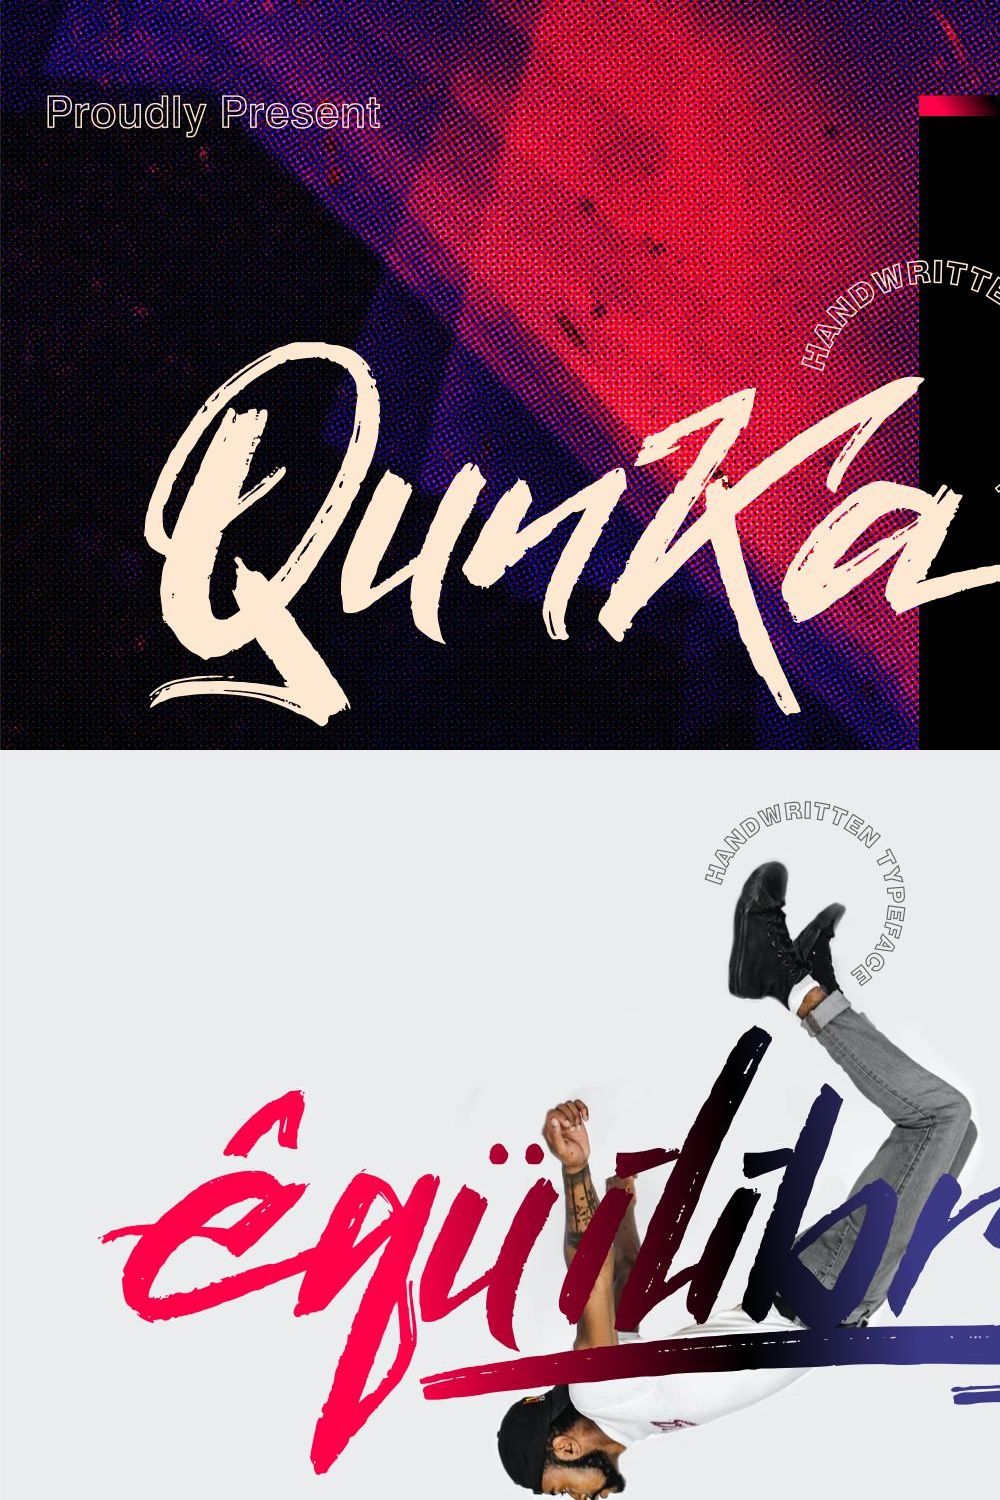 Qunka Font pinterest preview image.